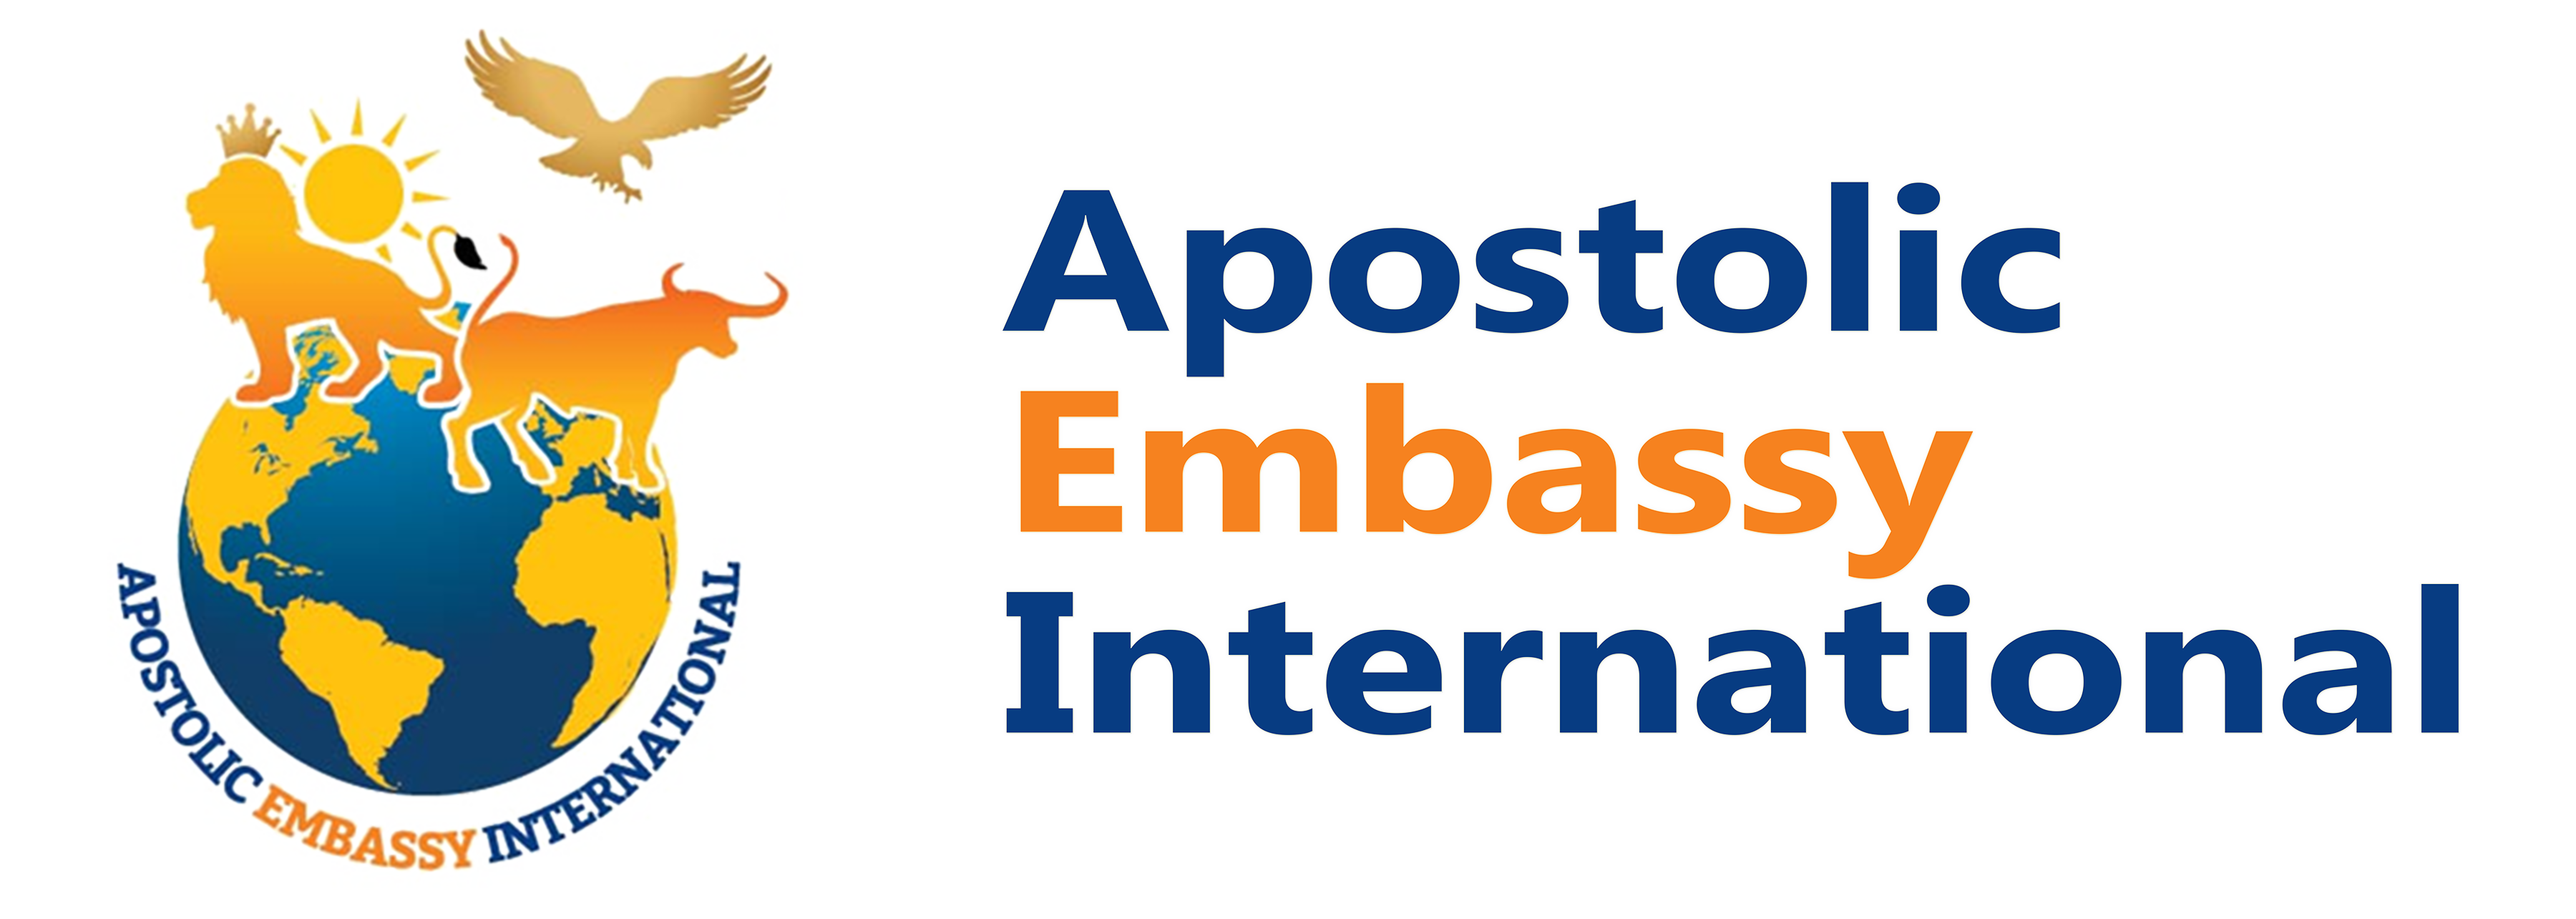 Apostolic Embassy International